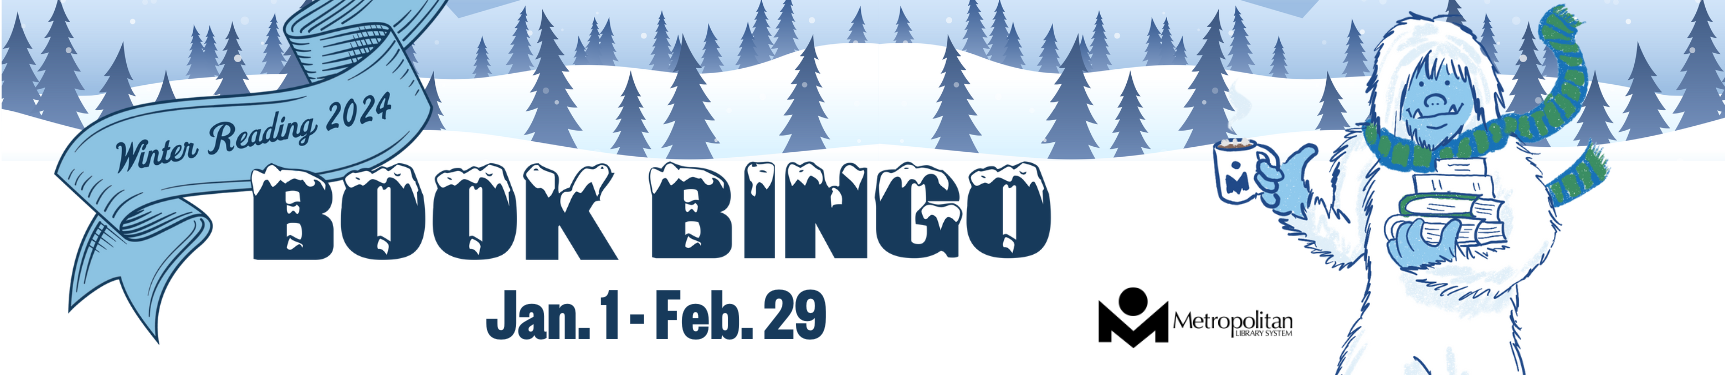 Winter Reading 2024 Book Bingo, January 1 - February 29.